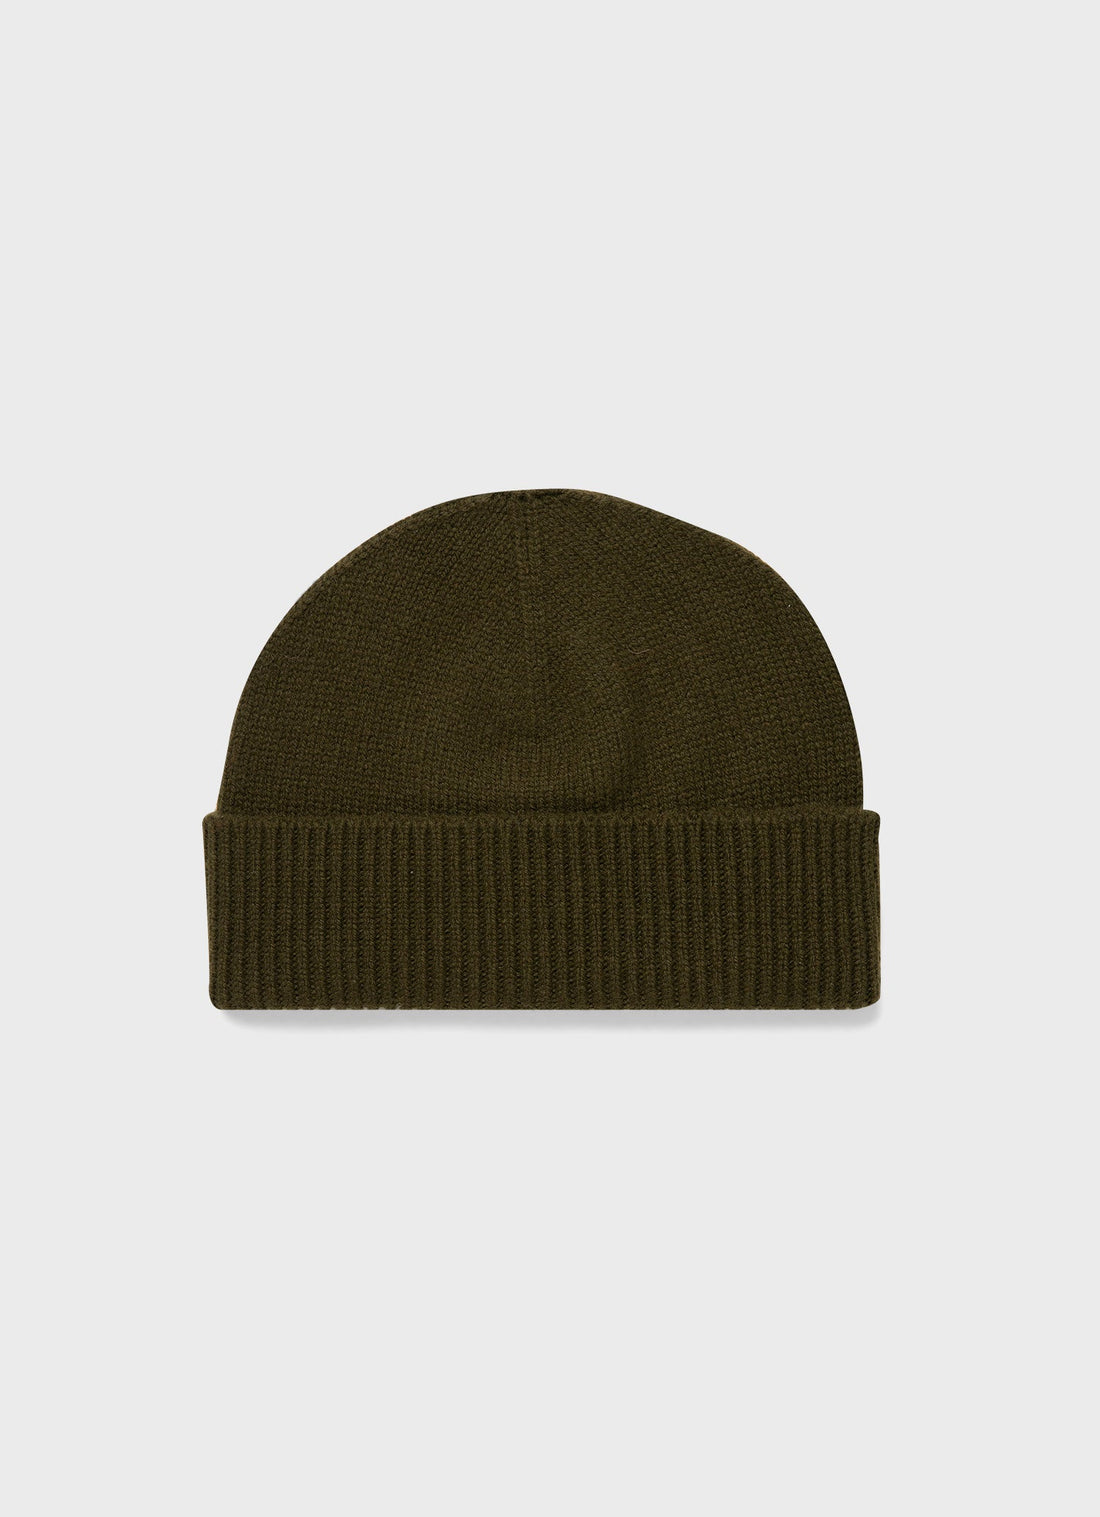 Scottish Lambswool Hat in Dark Olive